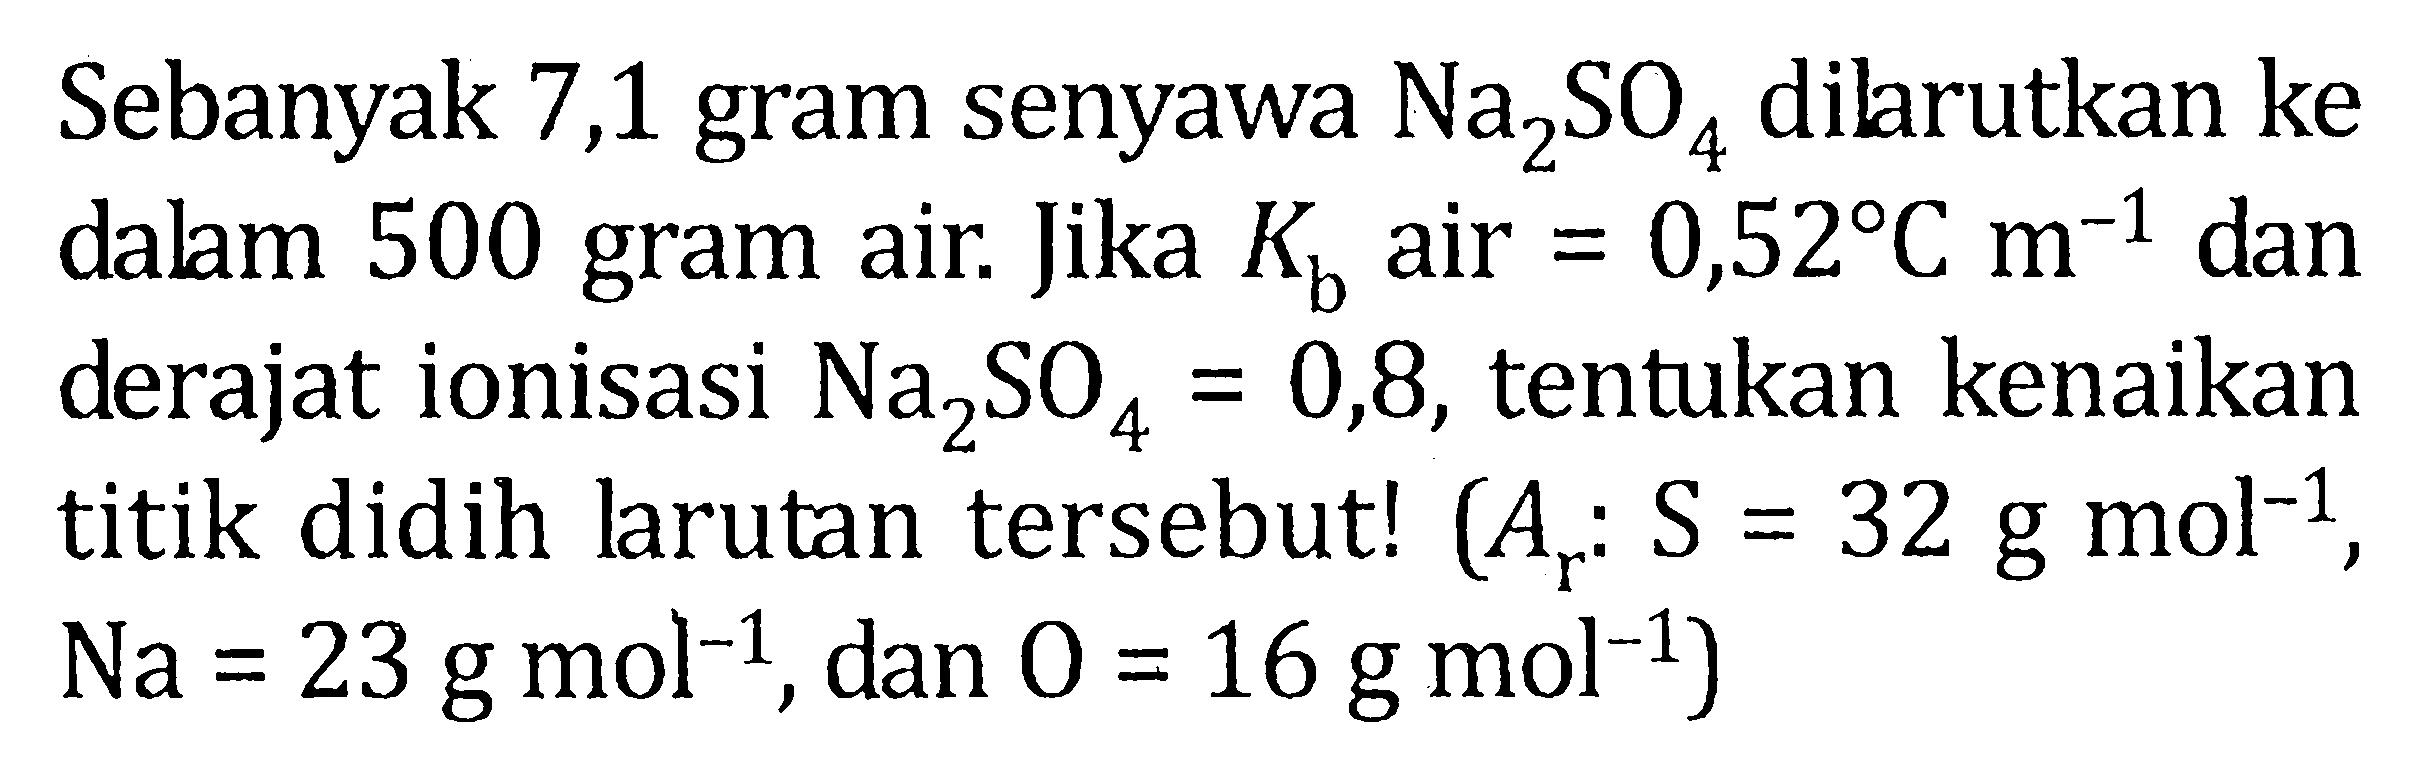 Sebanyak 7,1 gram senyawa Na2SO4 dilarutkan ke dalam 500 gram air. Jika Kb air = 0,52 Cm^-1 dan derajat ionisasi Na2SO4 = 0,8, tentukan kenaikan titik didih larutan tersebut! (Ar S = 32 g mol^-1, Na = 23 g mol^-1, dan O = 16 g mol^-1)